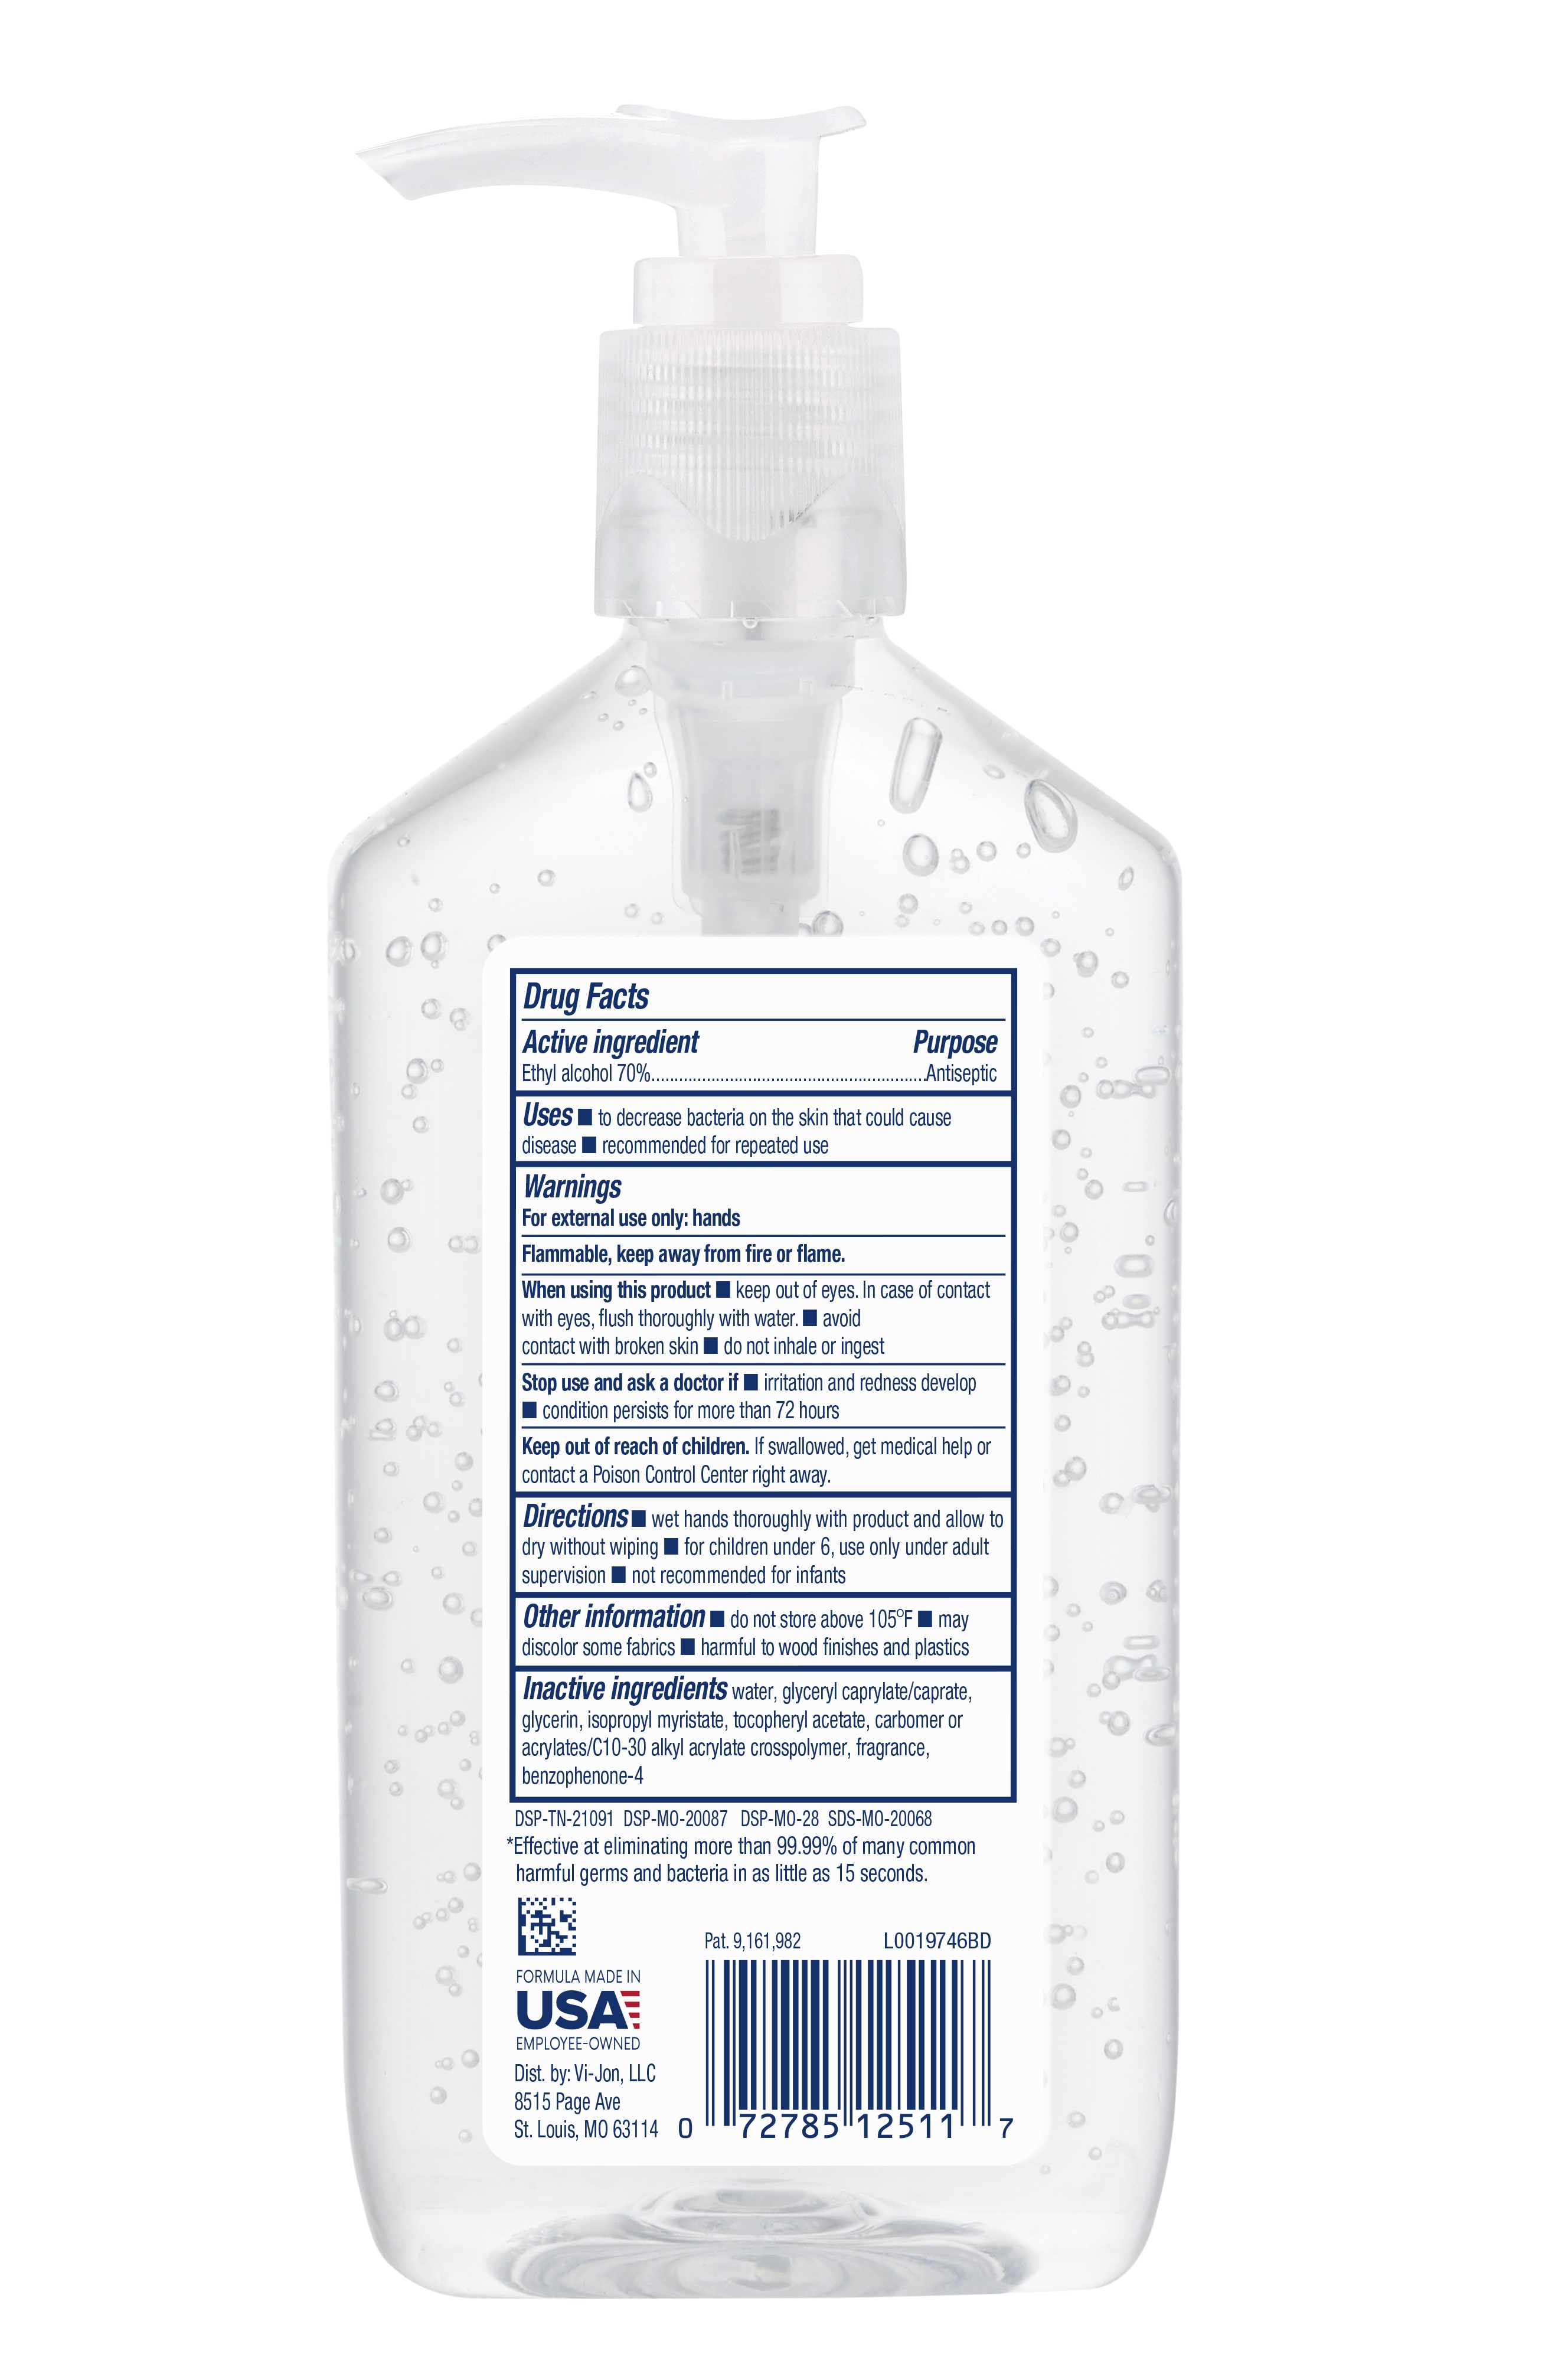 Germ-X® Advanced Hand Sanitizer with Pump, Bottle of Hand Sanitizer, Original Scent, 12 fl oz - image 2 of 7